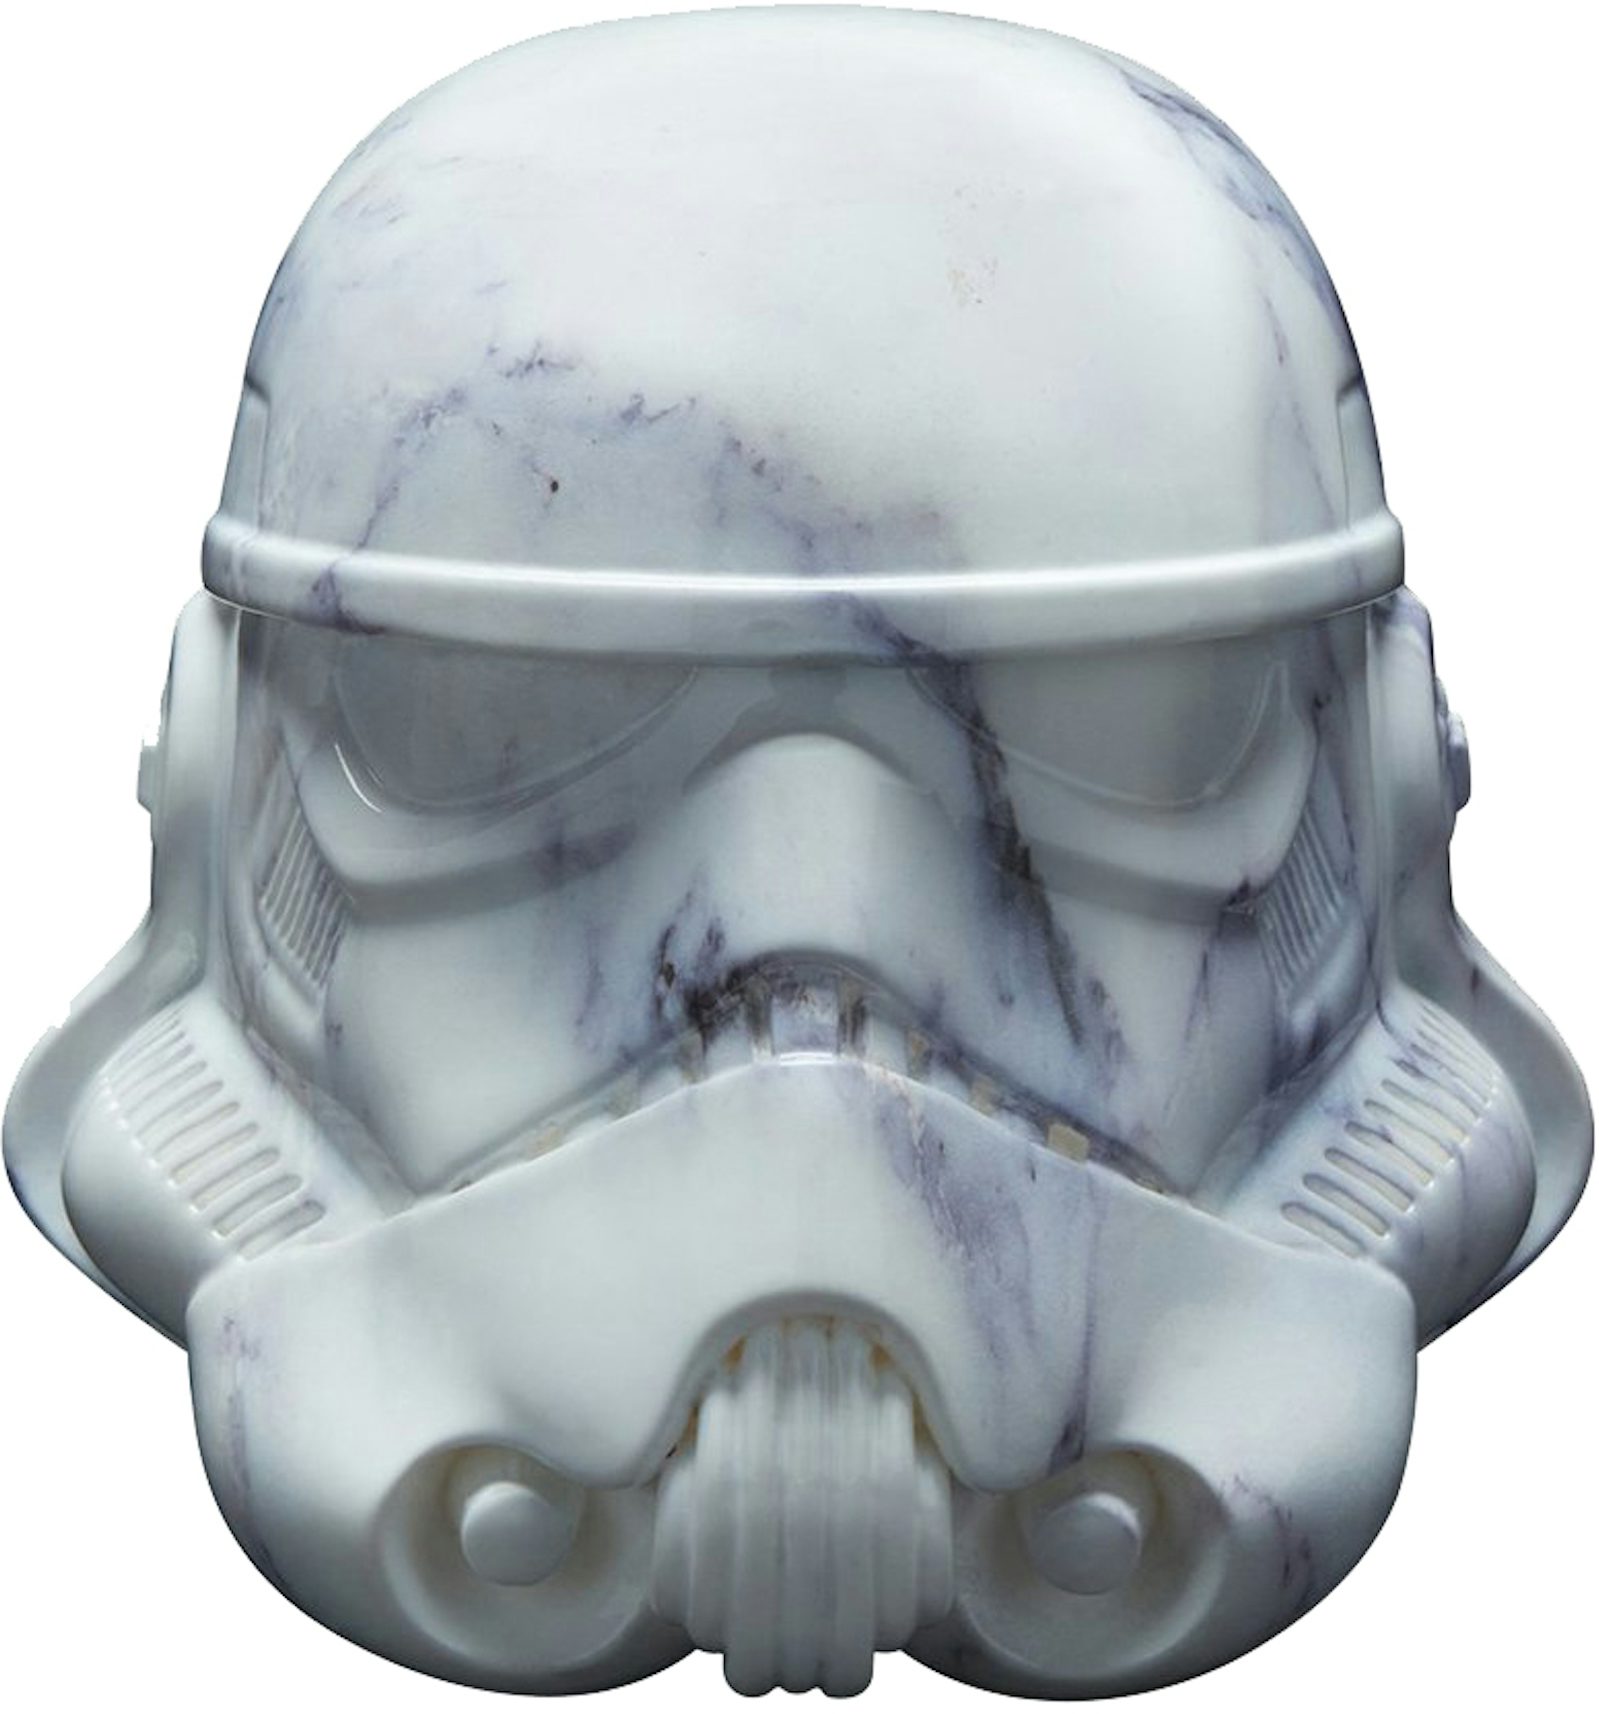 Football helmets in the 'Star Wars' universe